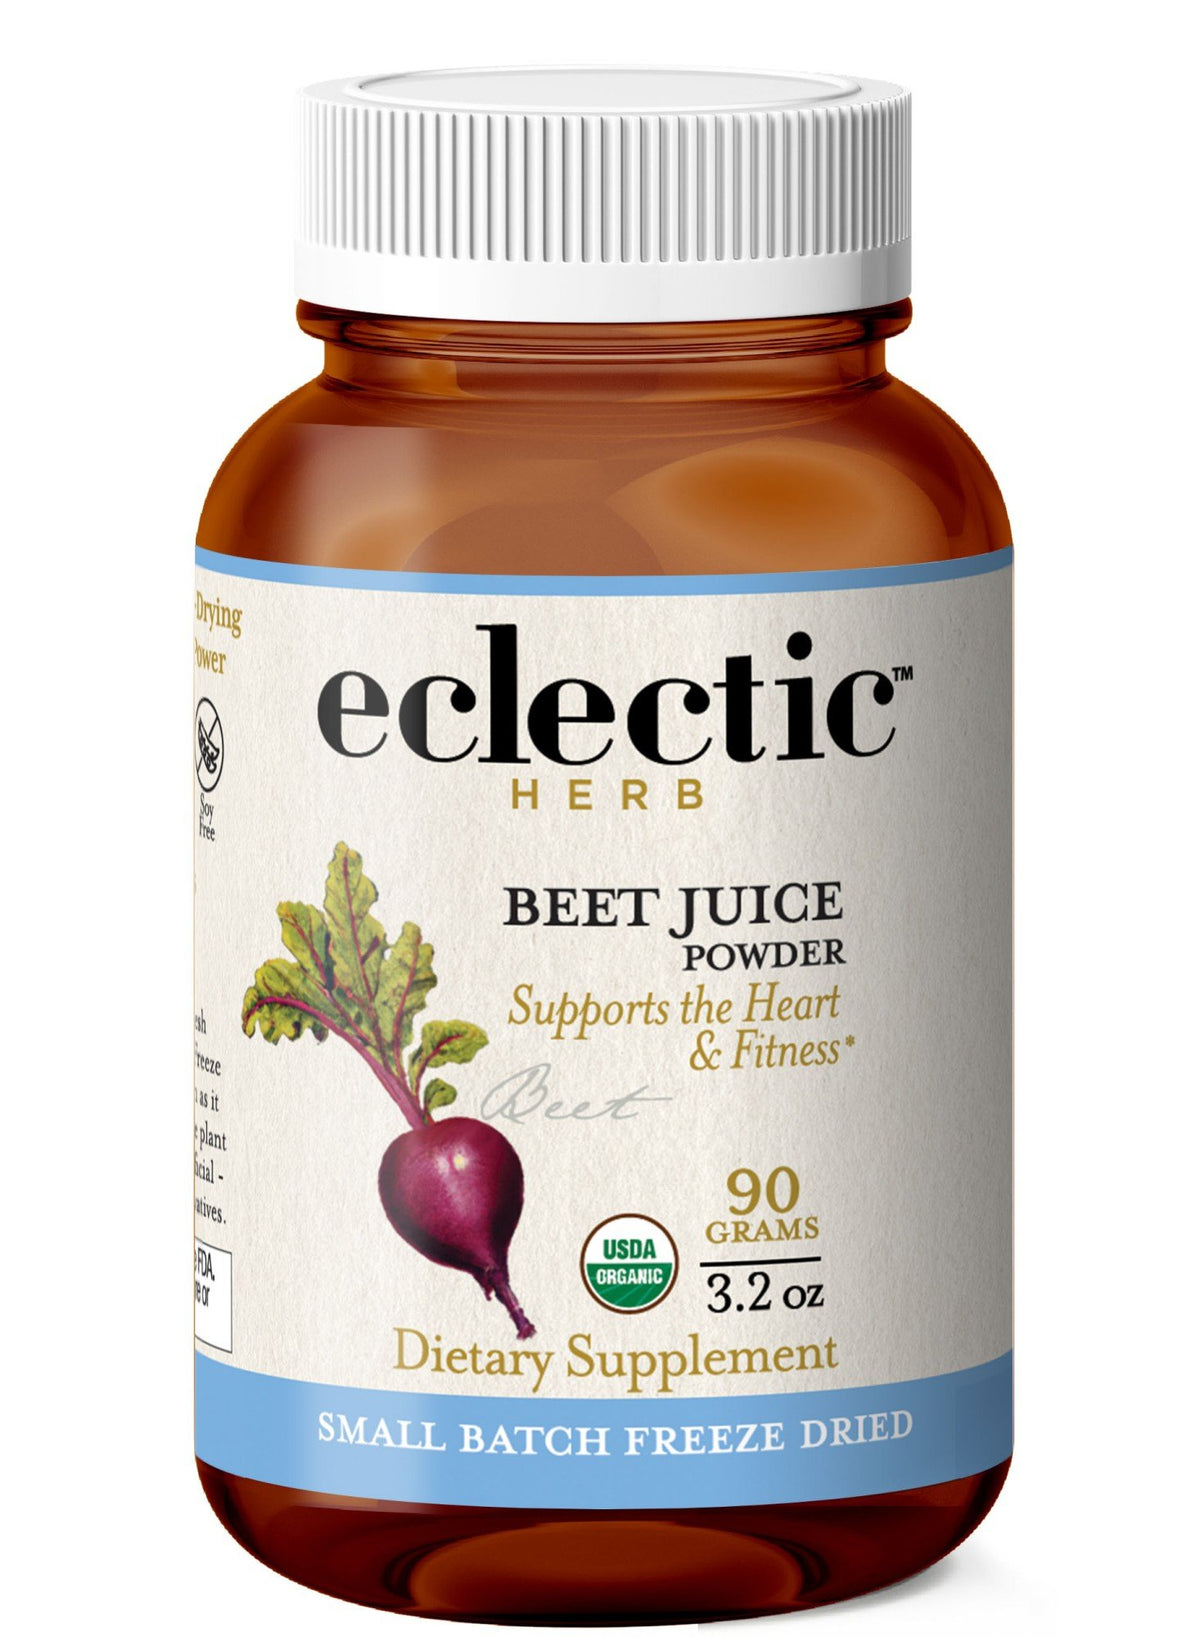 Eclectic Herb Beet Juice Powder Freeze-Dried 90 g Powder